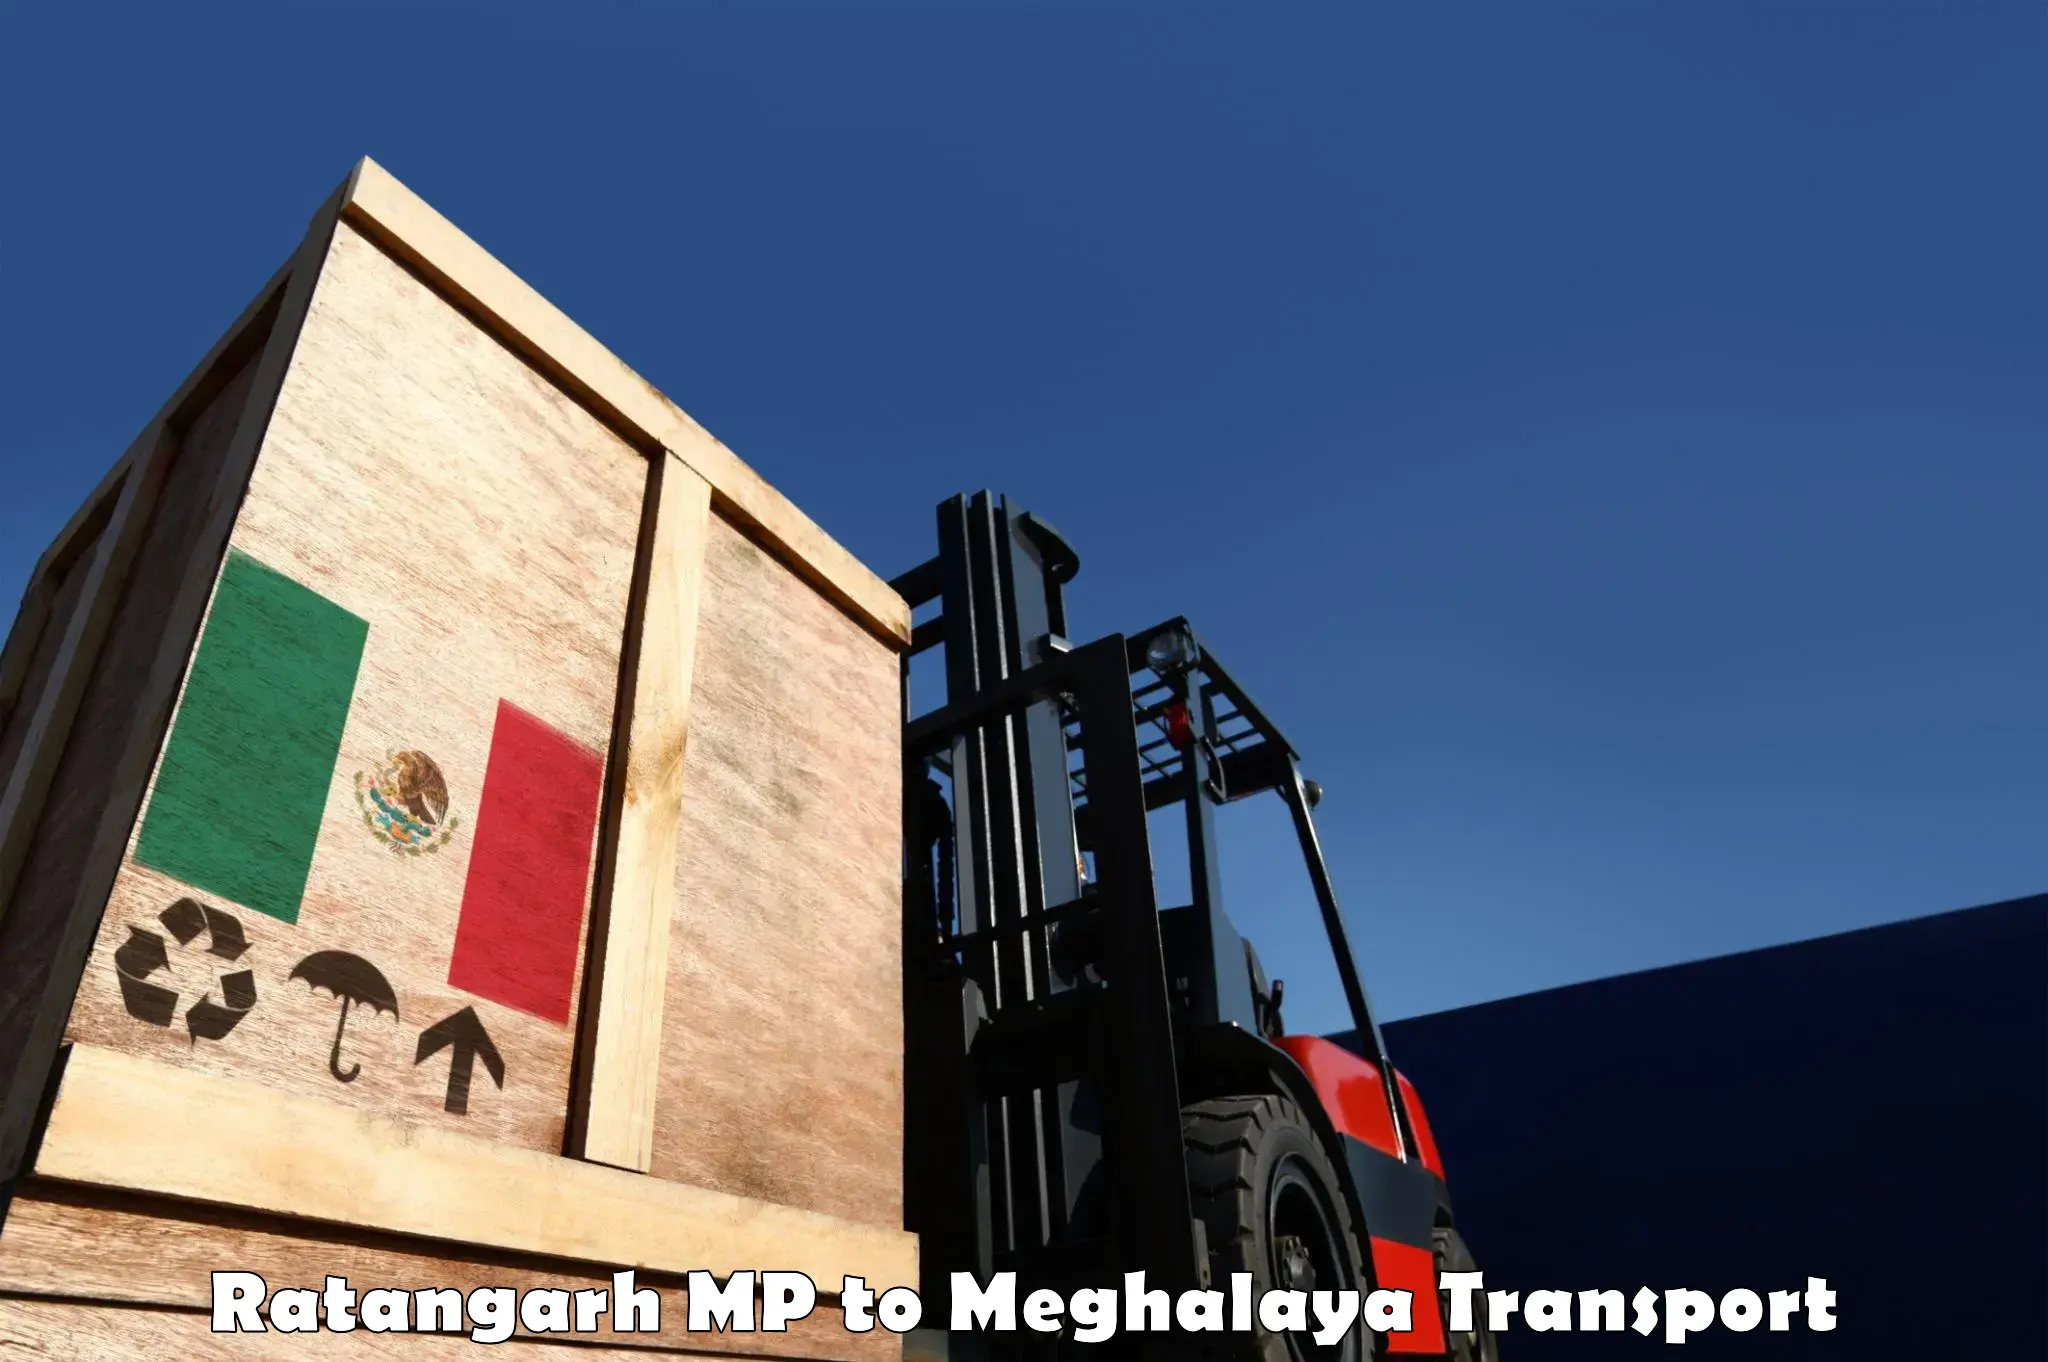 Pick up transport service Ratangarh MP to Shillong